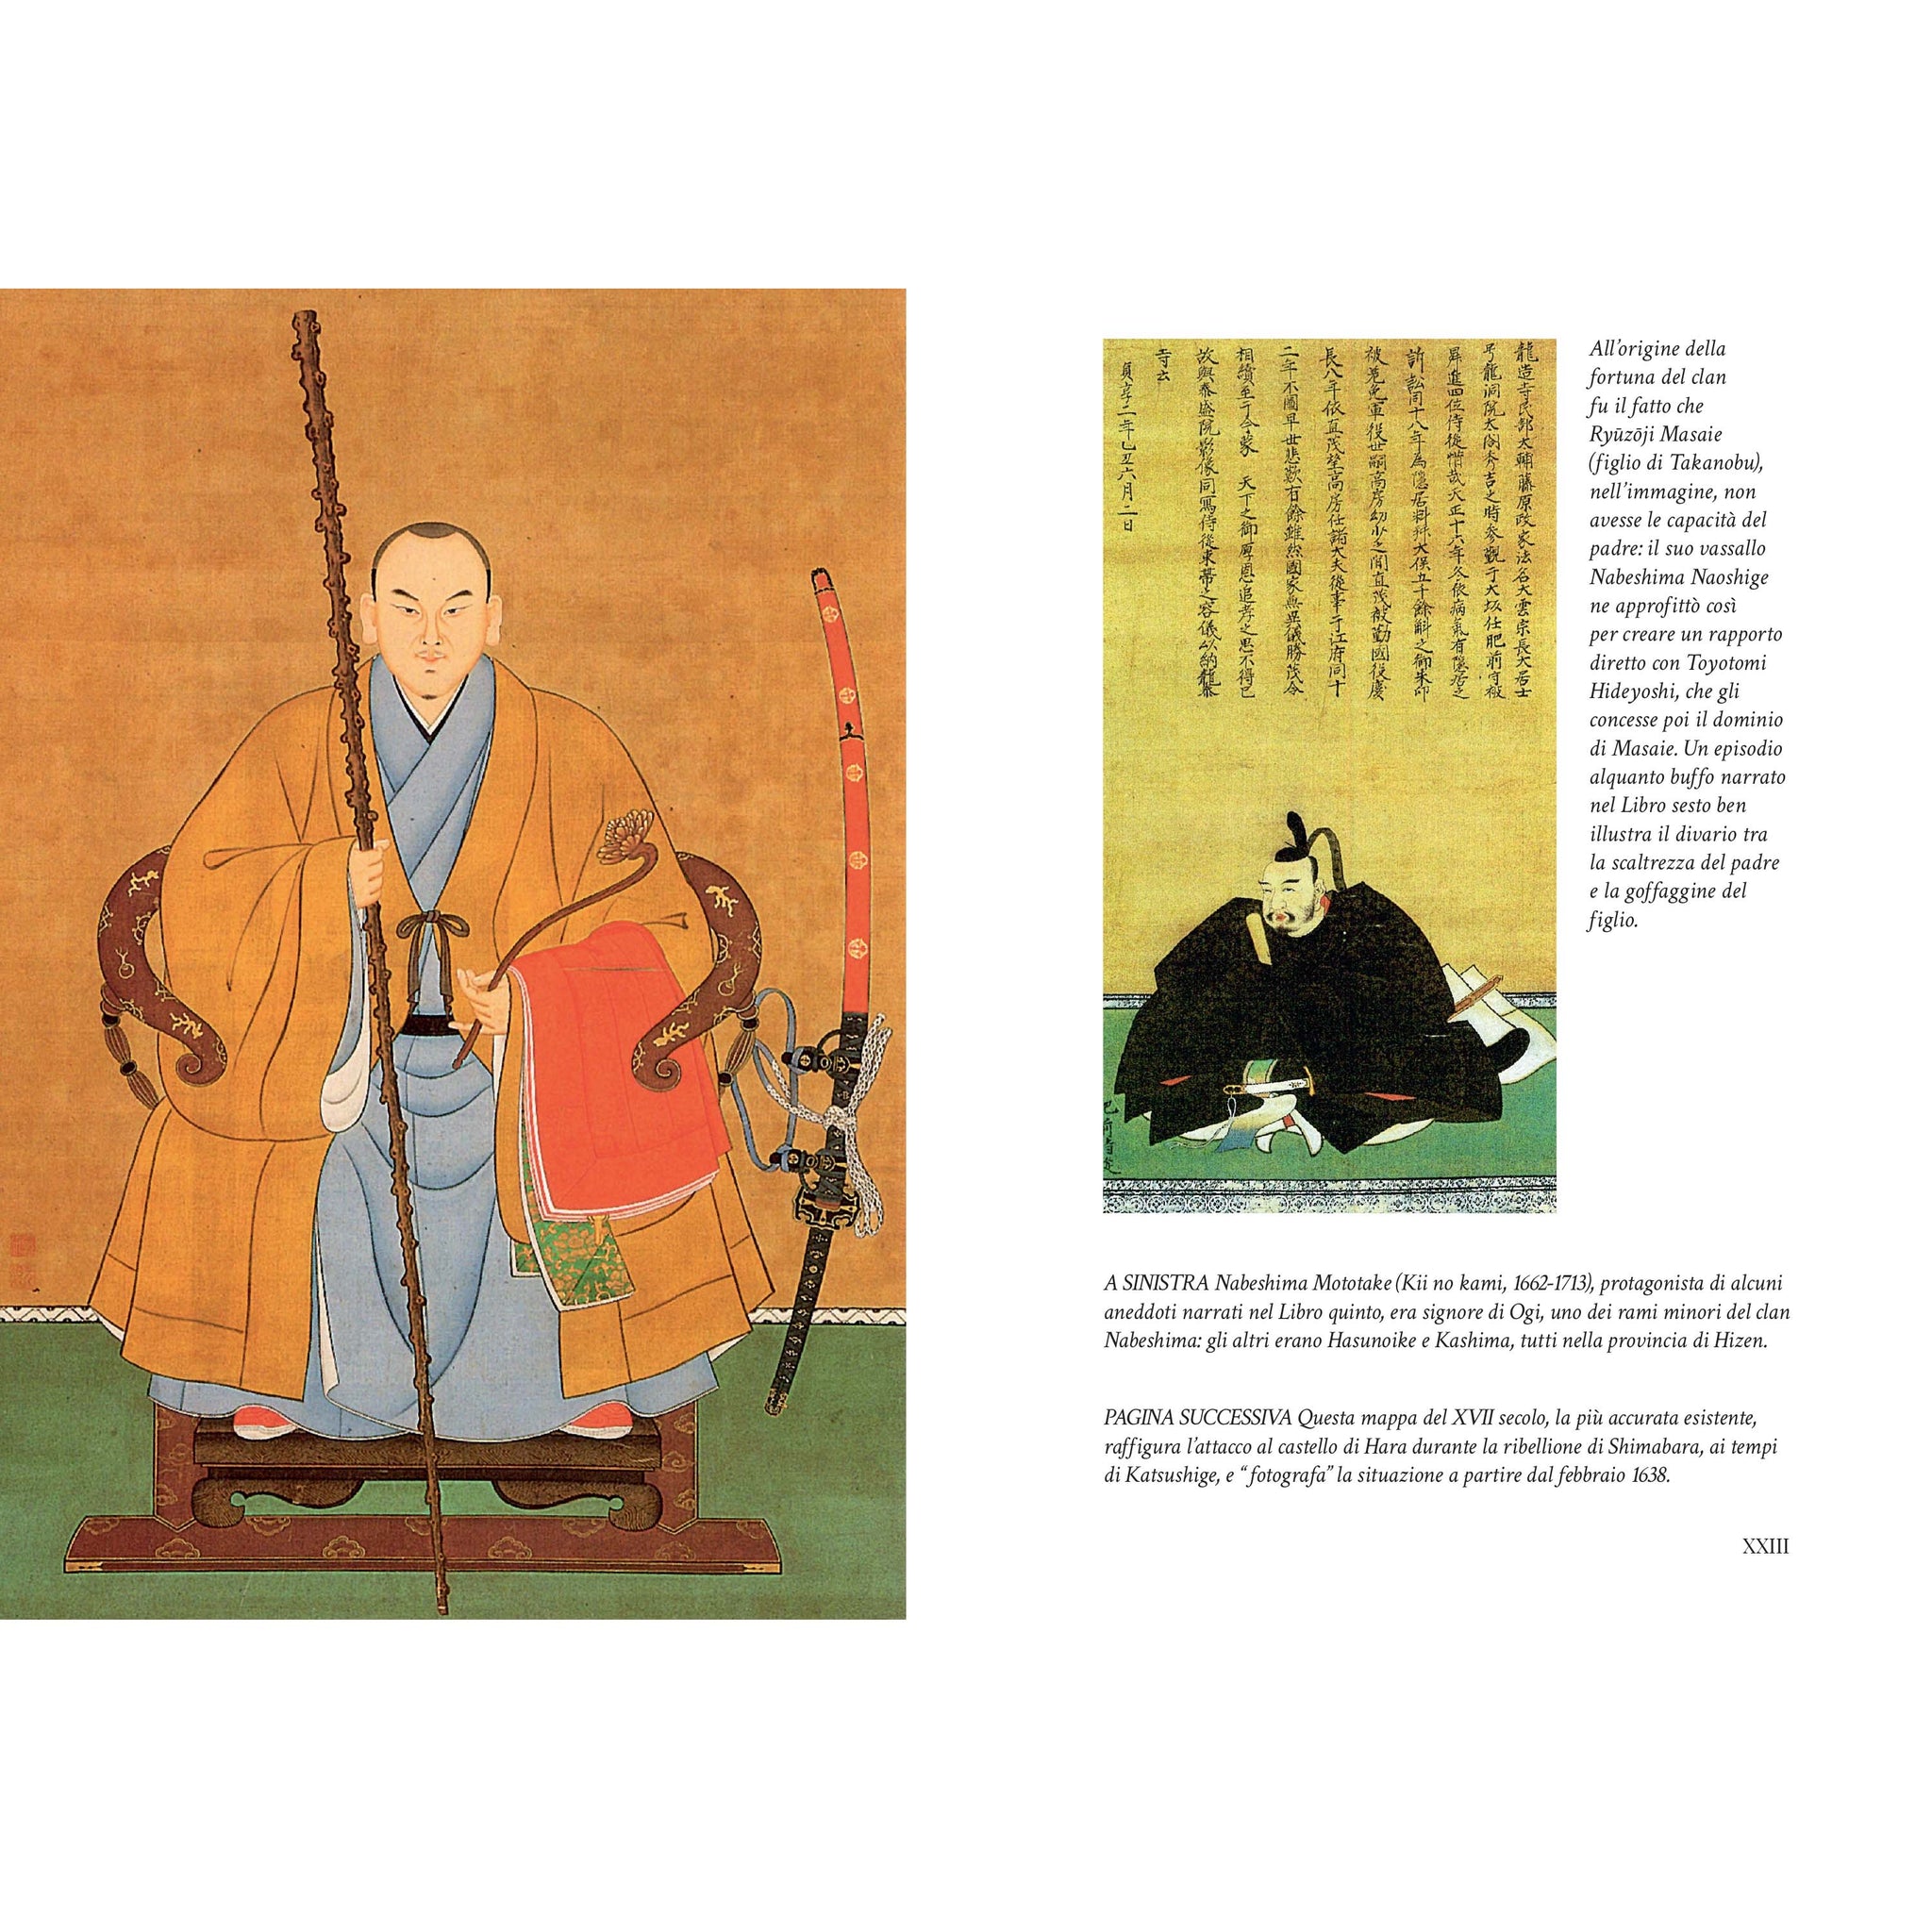 Hagakure - How to live and die like a samurai